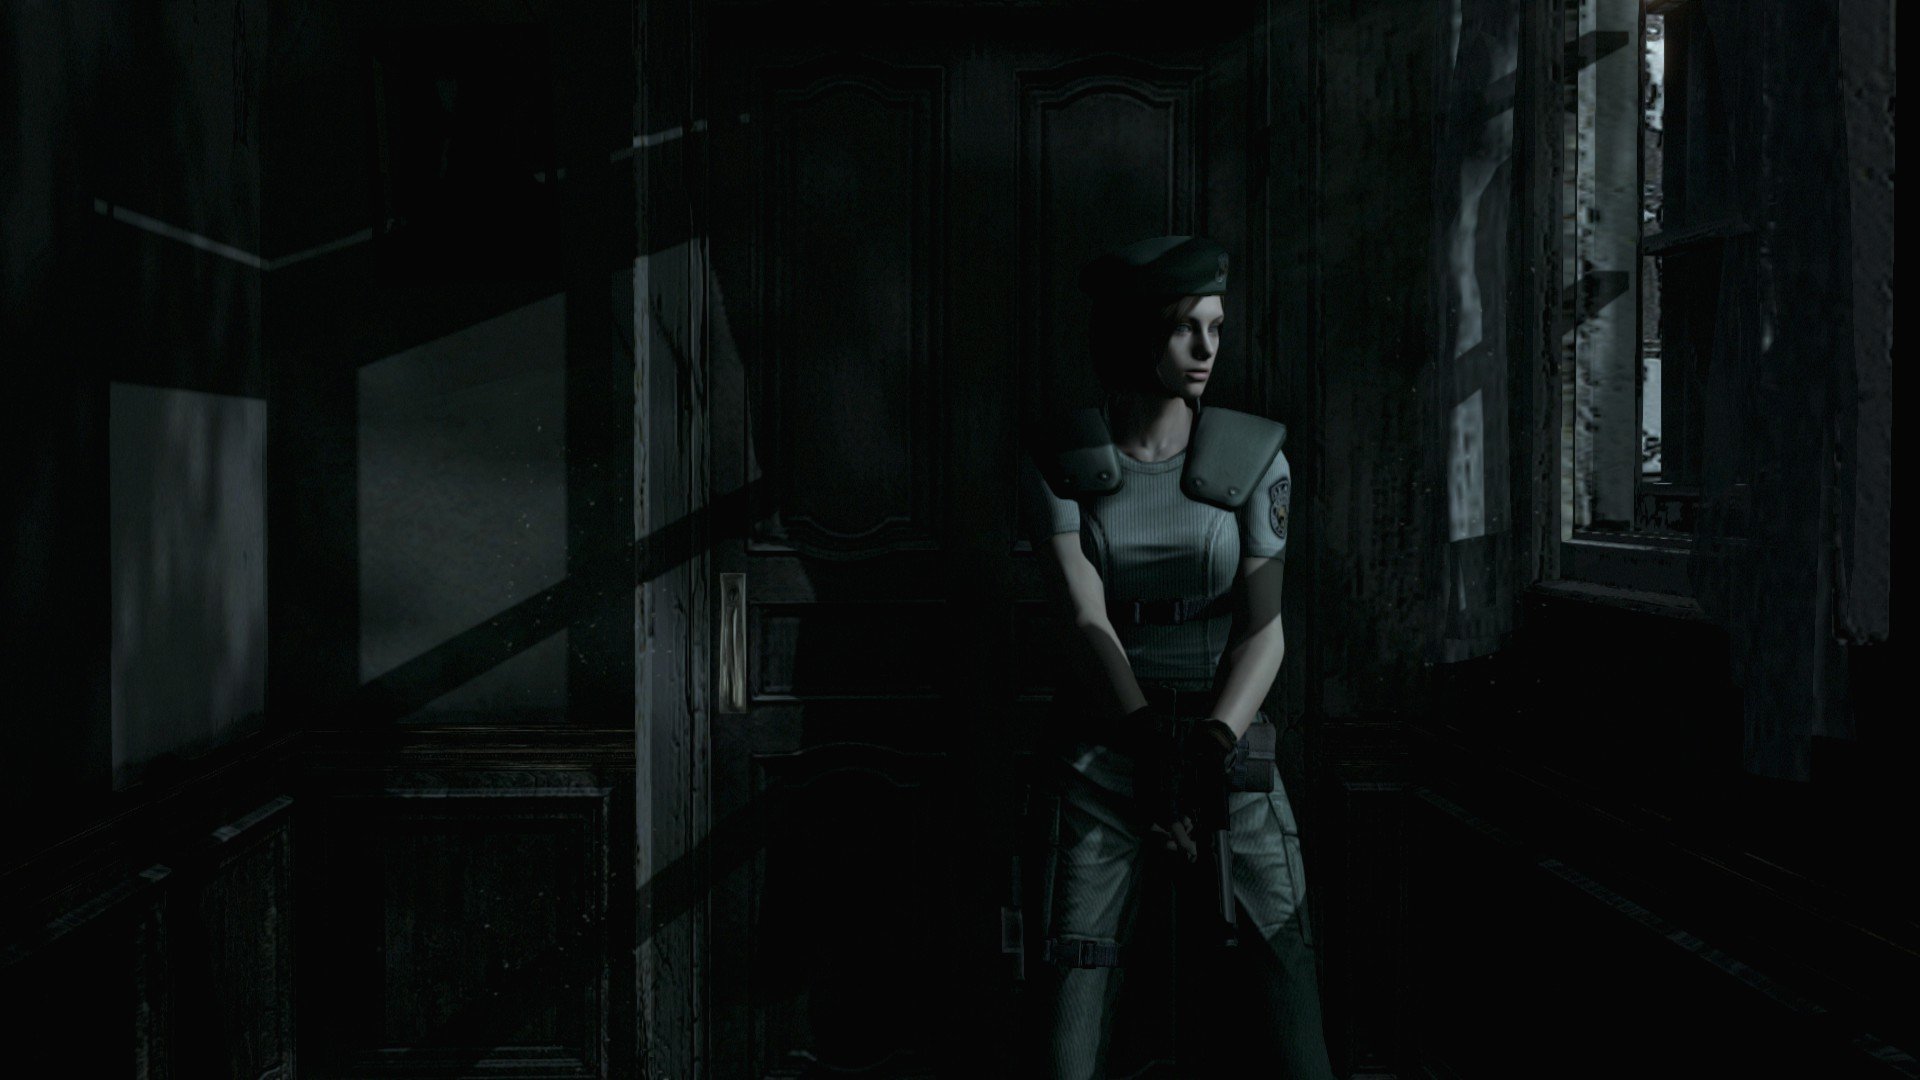 Resident Evil Jill Valentine